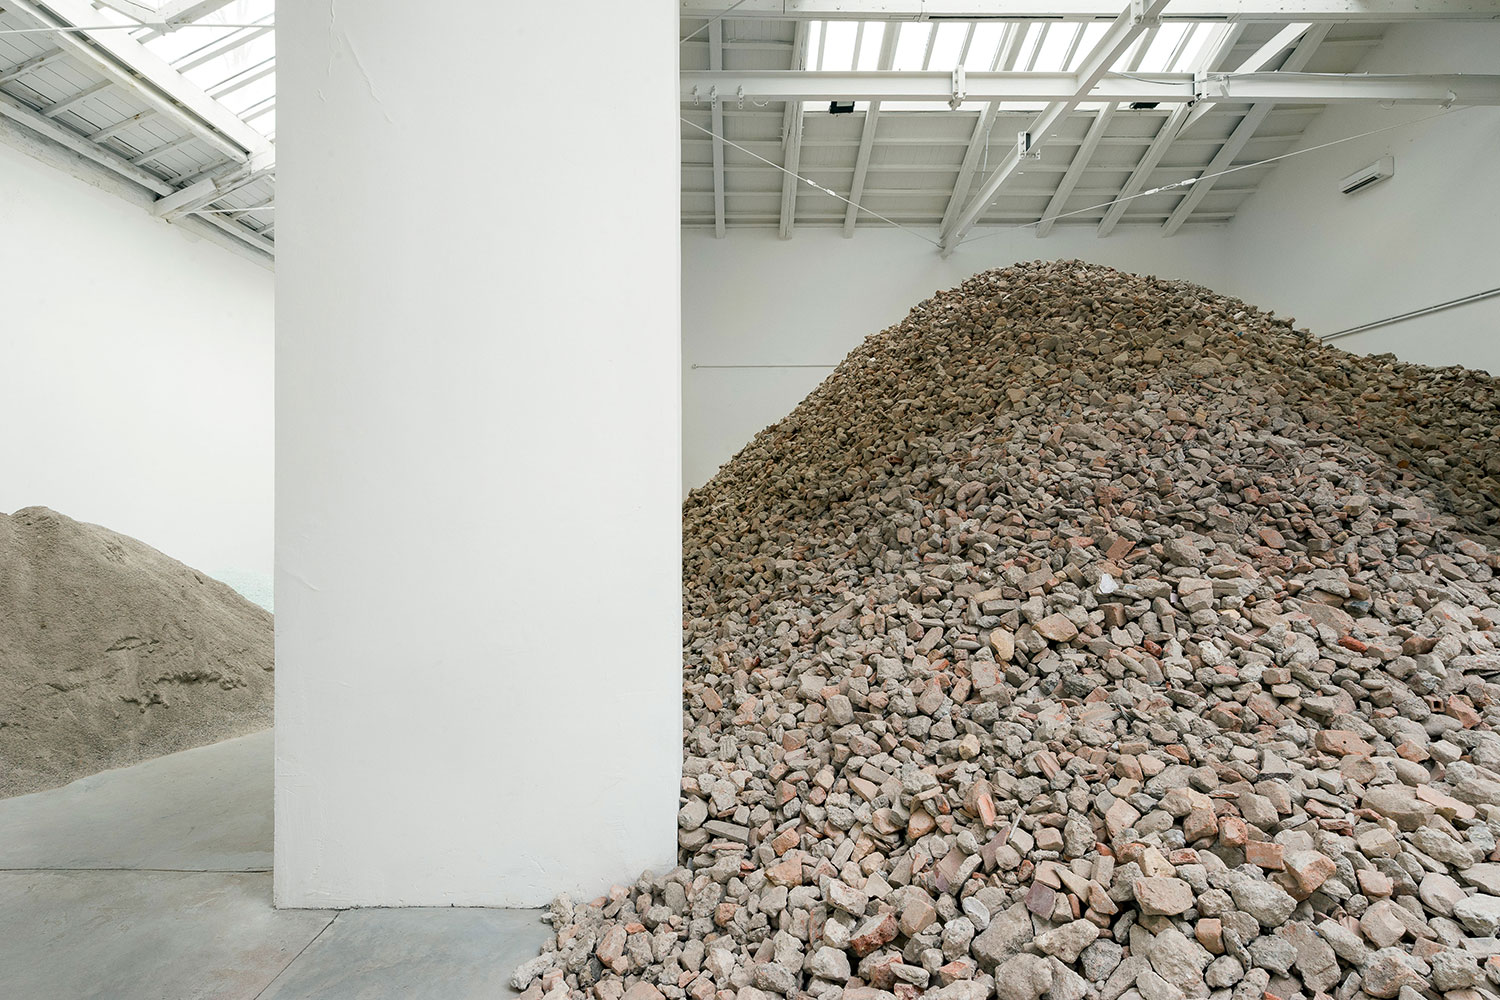 Why does Lara Almarcegui create massive piles of rubble?